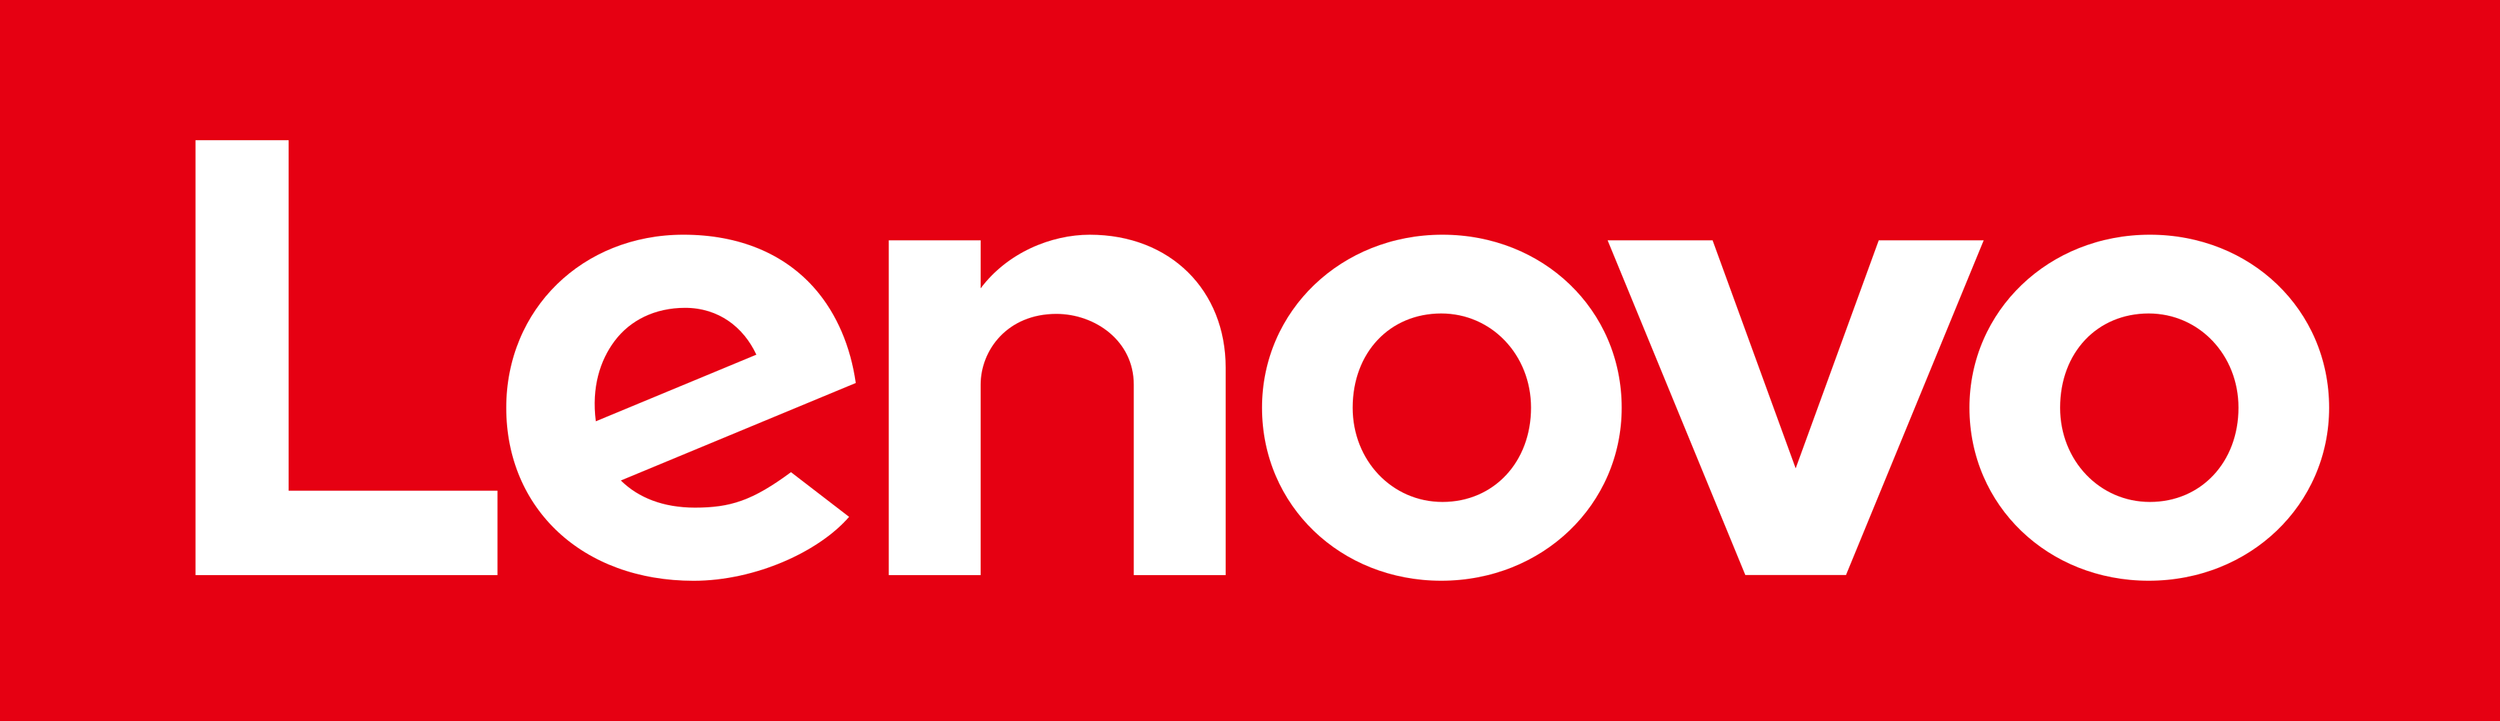 lenovo-logo-1-1.png